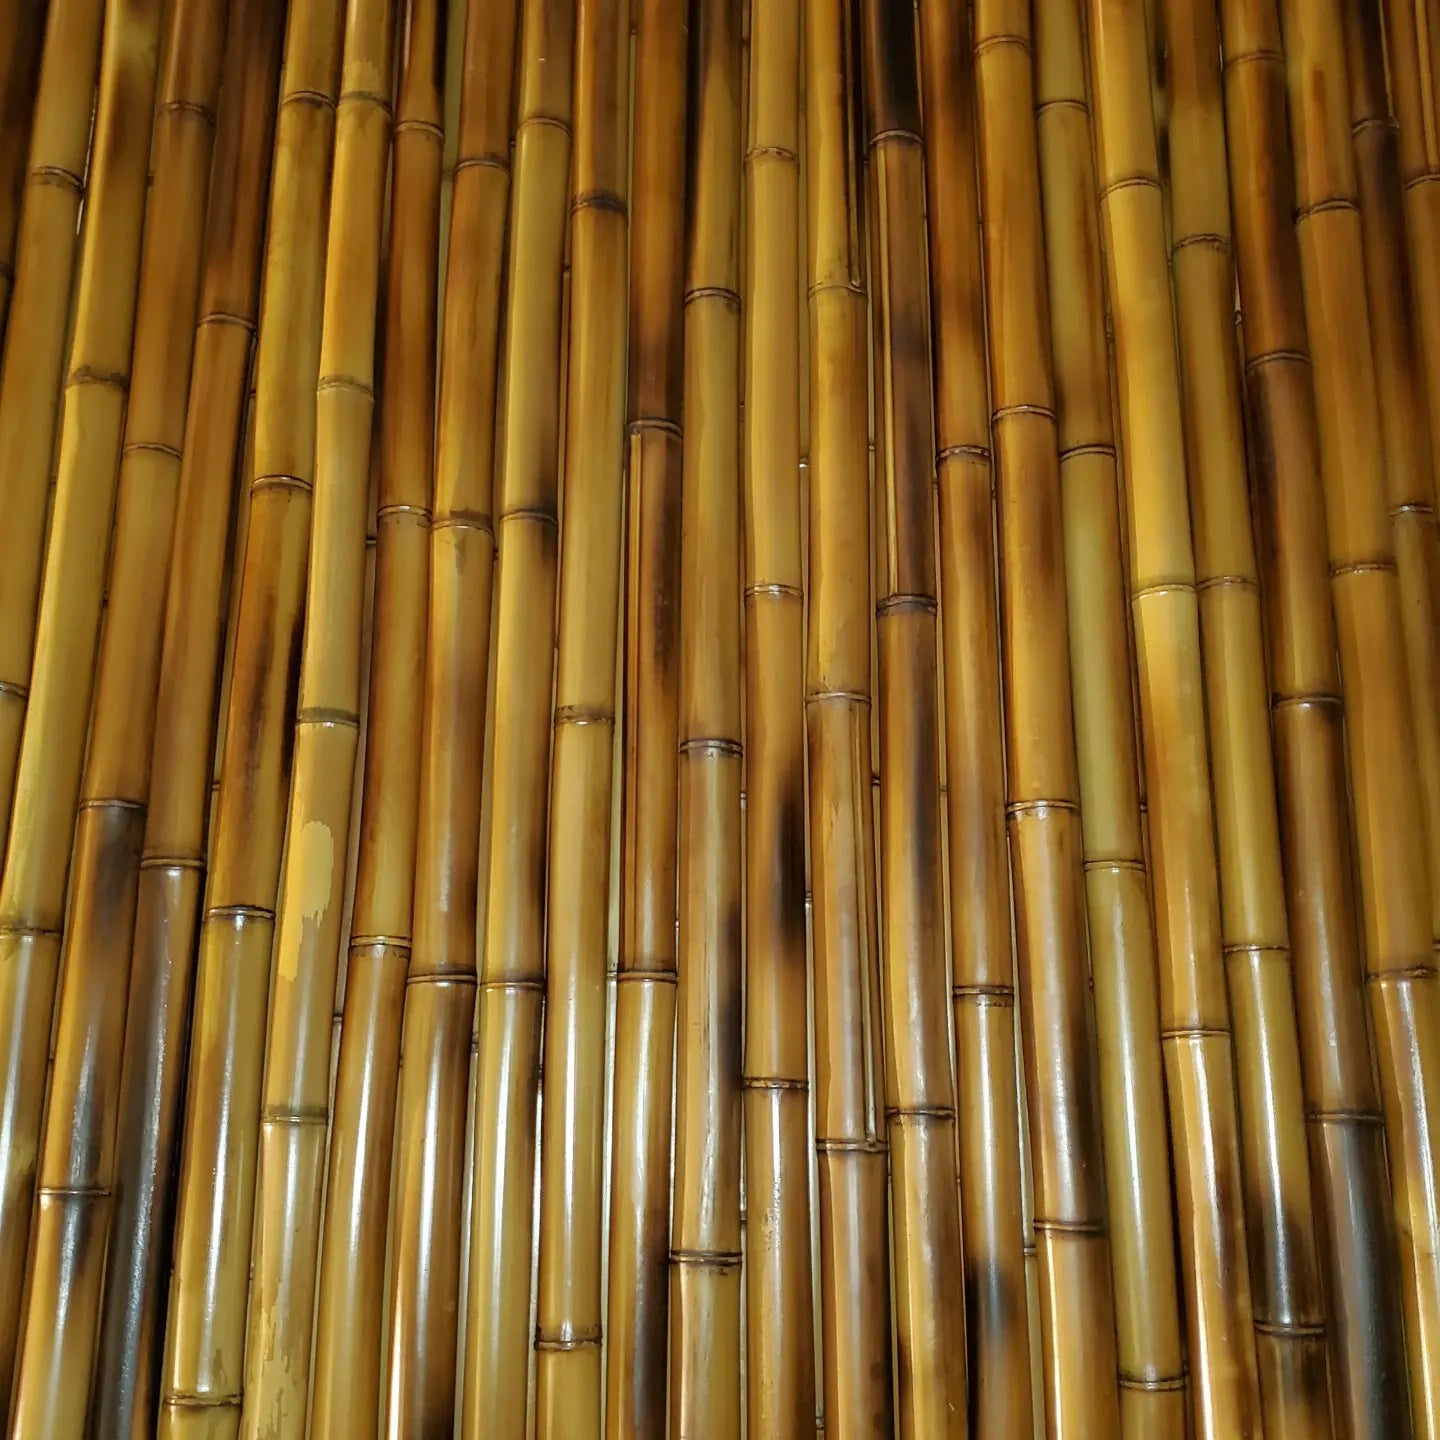 Bamboo Poles Flame Cured – blackwoodbamboo